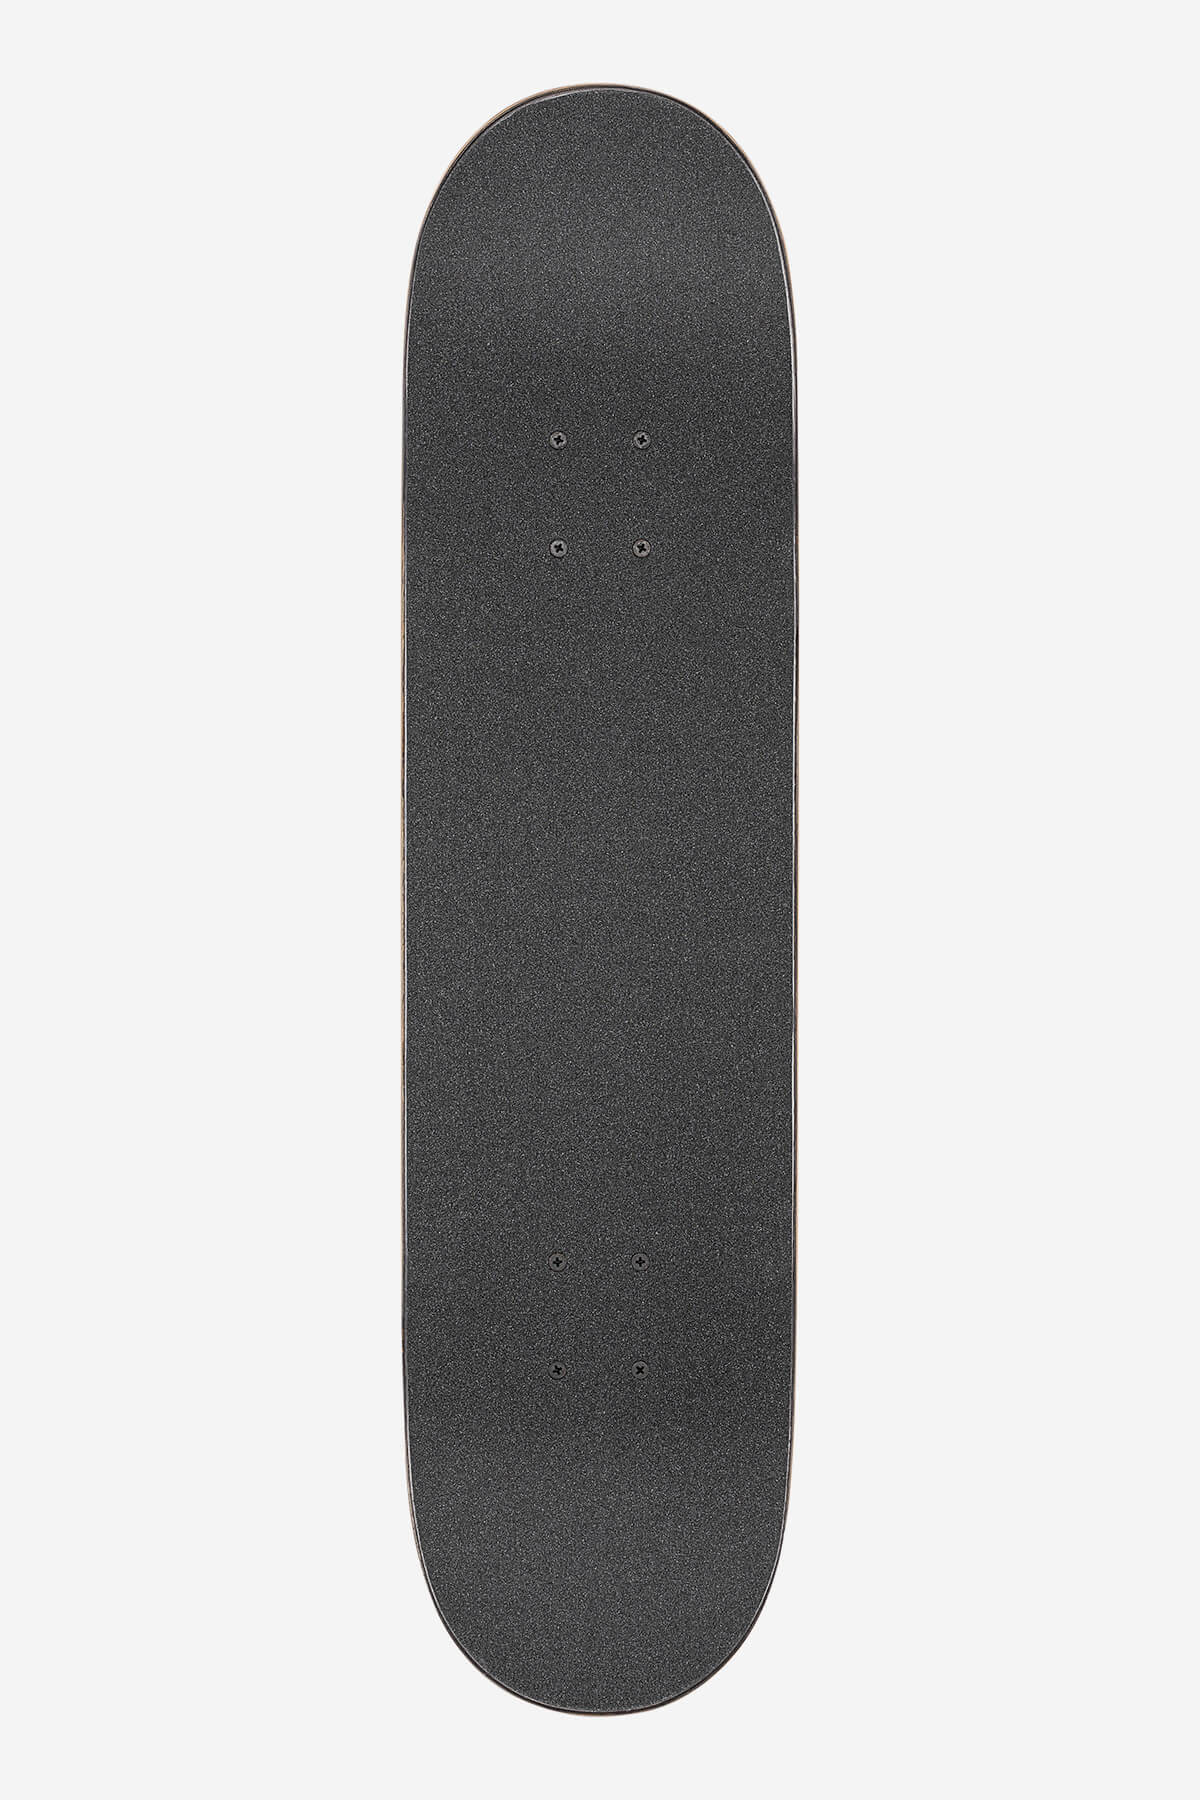 Globe - G1 Vuur - Black Dye - 8.0" Compleet Skateboard